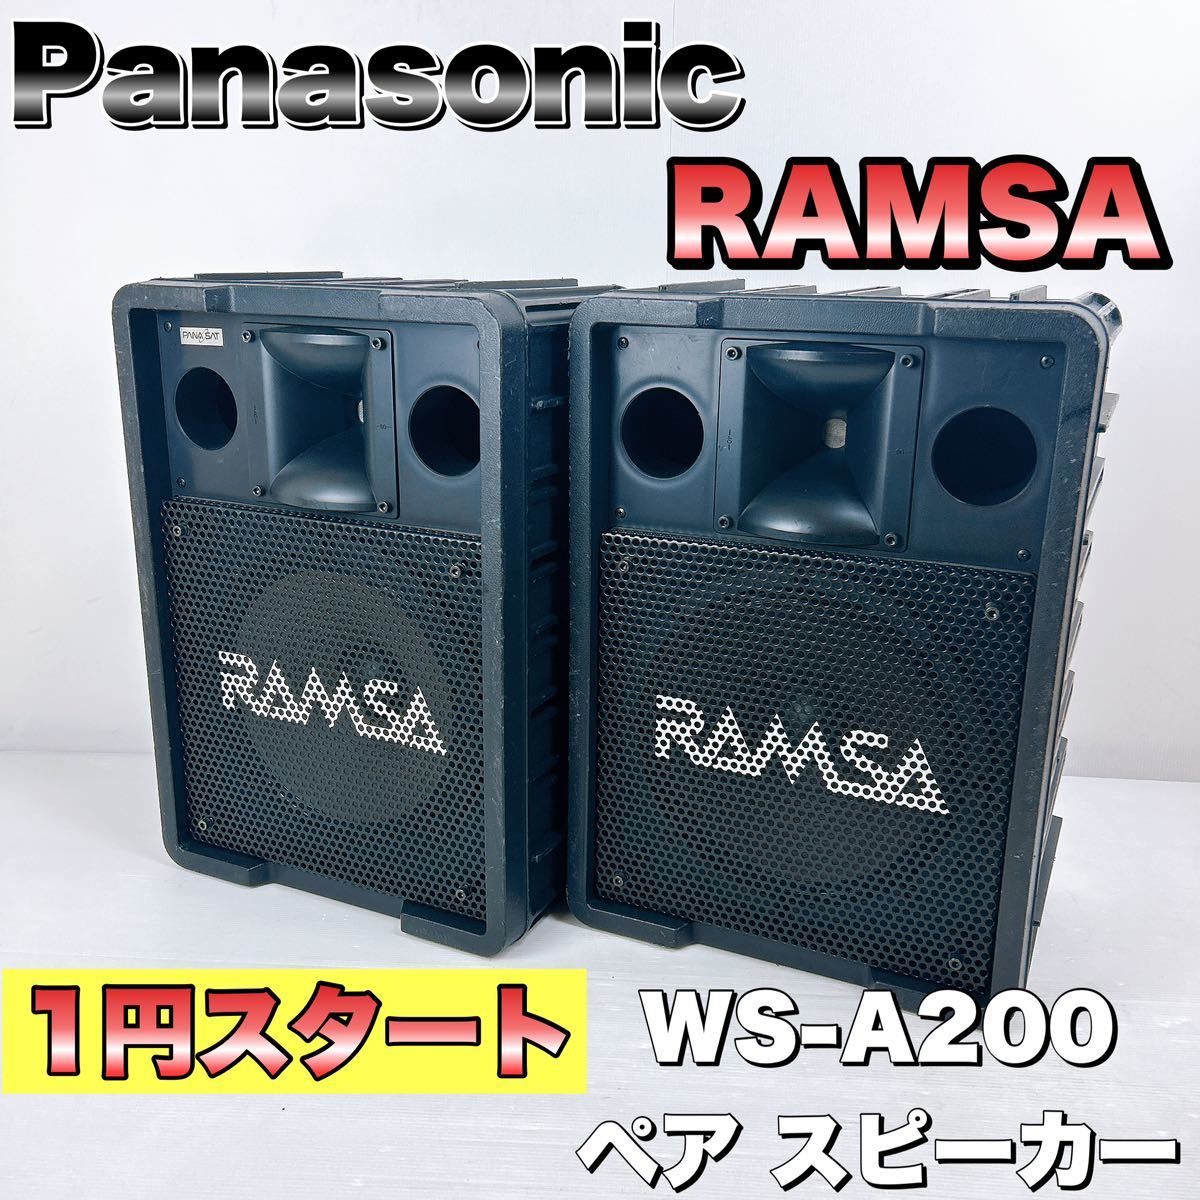 Yahoo!オークション -「ramsa ws-a200」(スピーカー) (オーディオ機器 